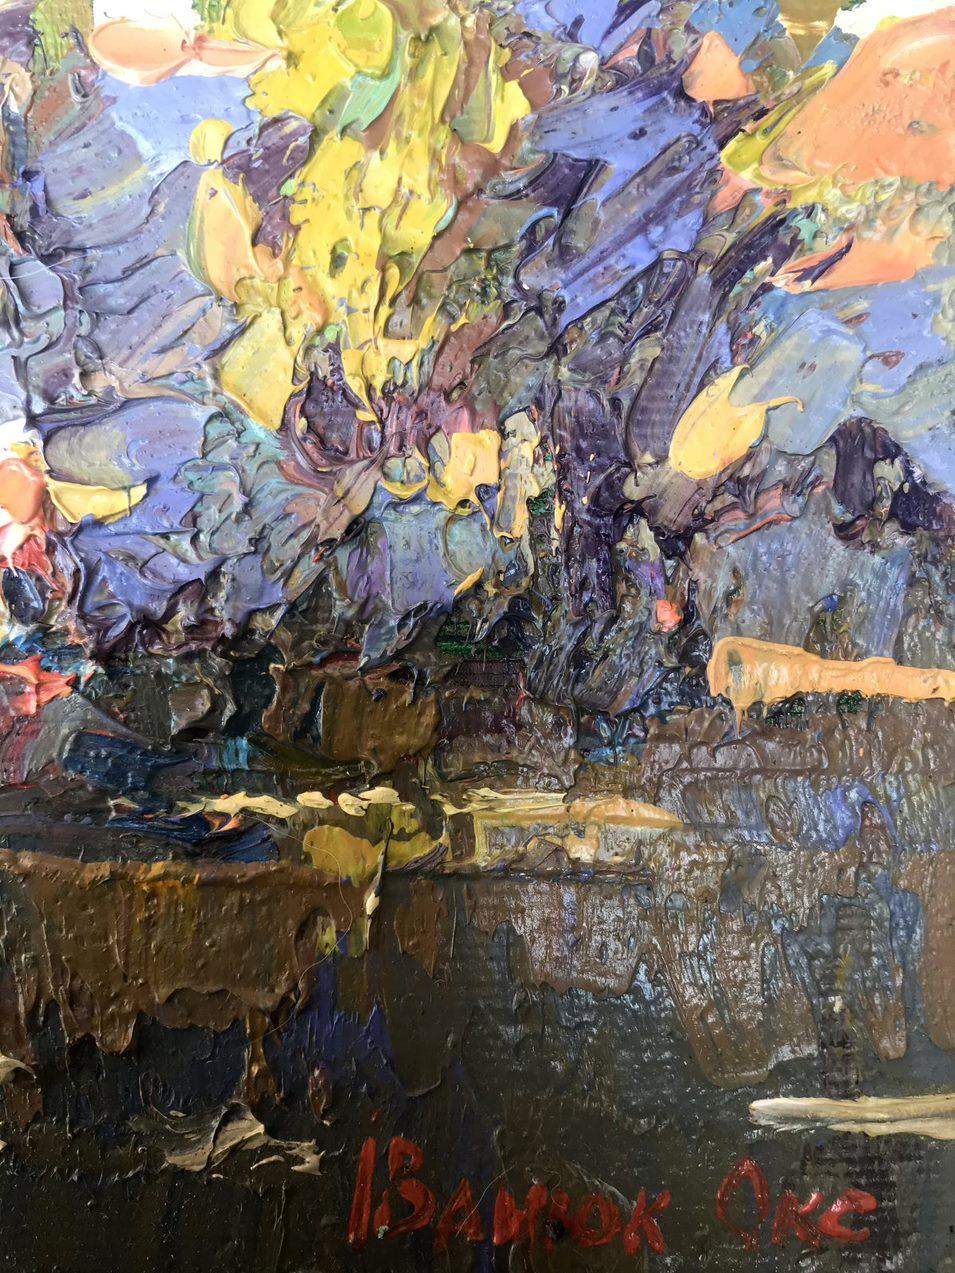 Artist: Oksana Kalenyuk 
Work: Original oil painting, handmade artwork, one of a kind 
Medium: Oil on canvas 
Year: 2023
Style: Impressionism
Title: Above the River
Size: 6